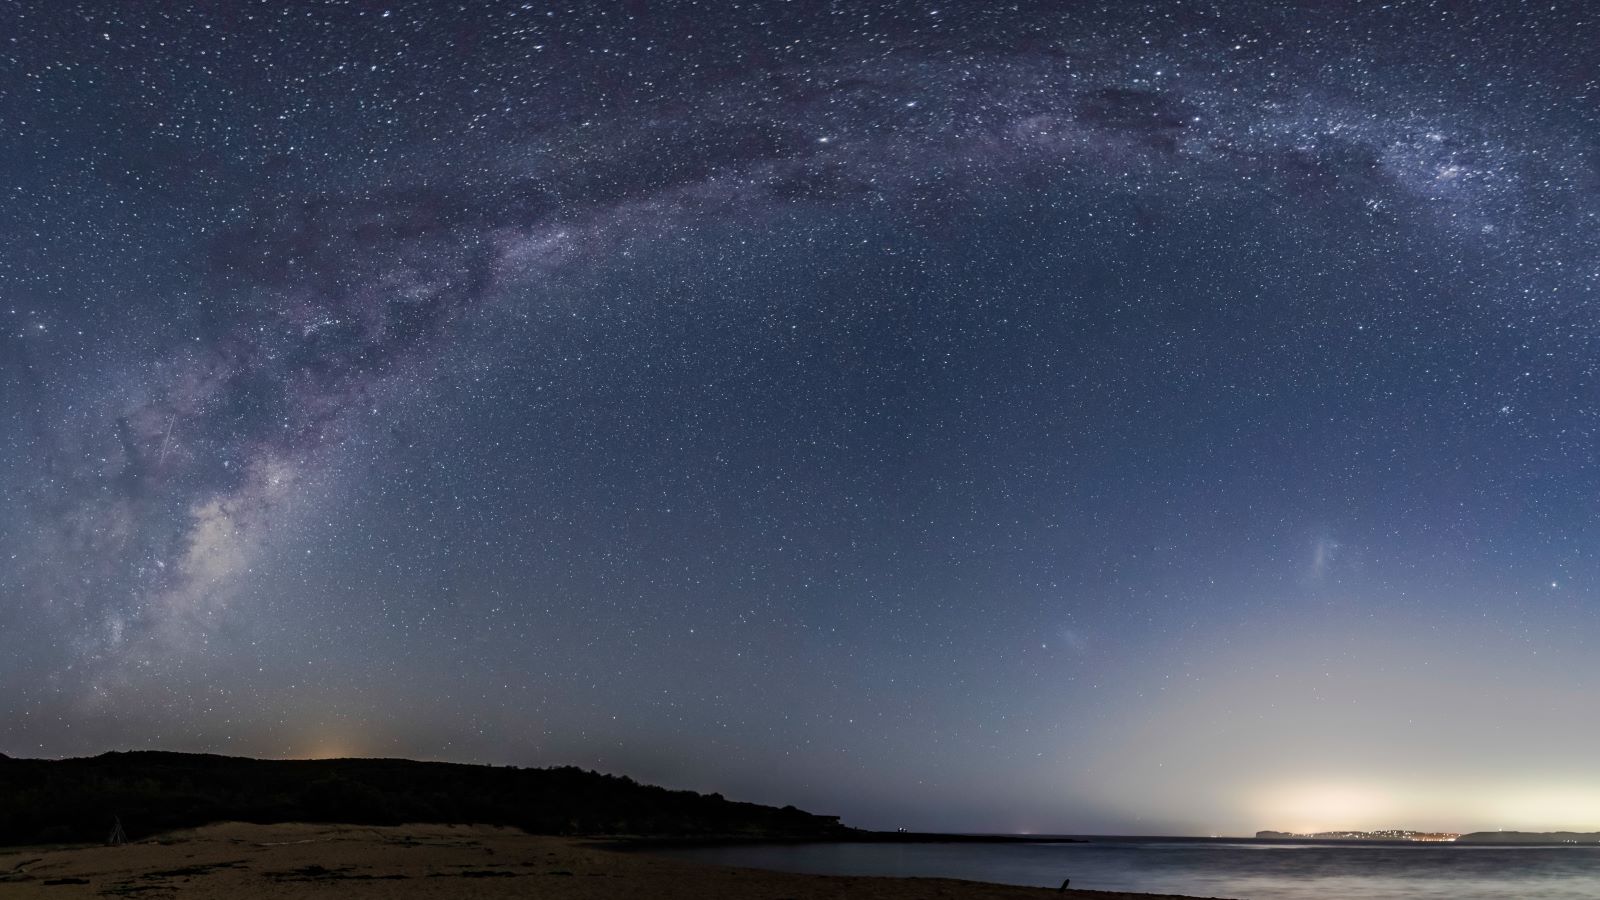 The coastal horizon at night off the Australian eastern coast showing the Milky Way.